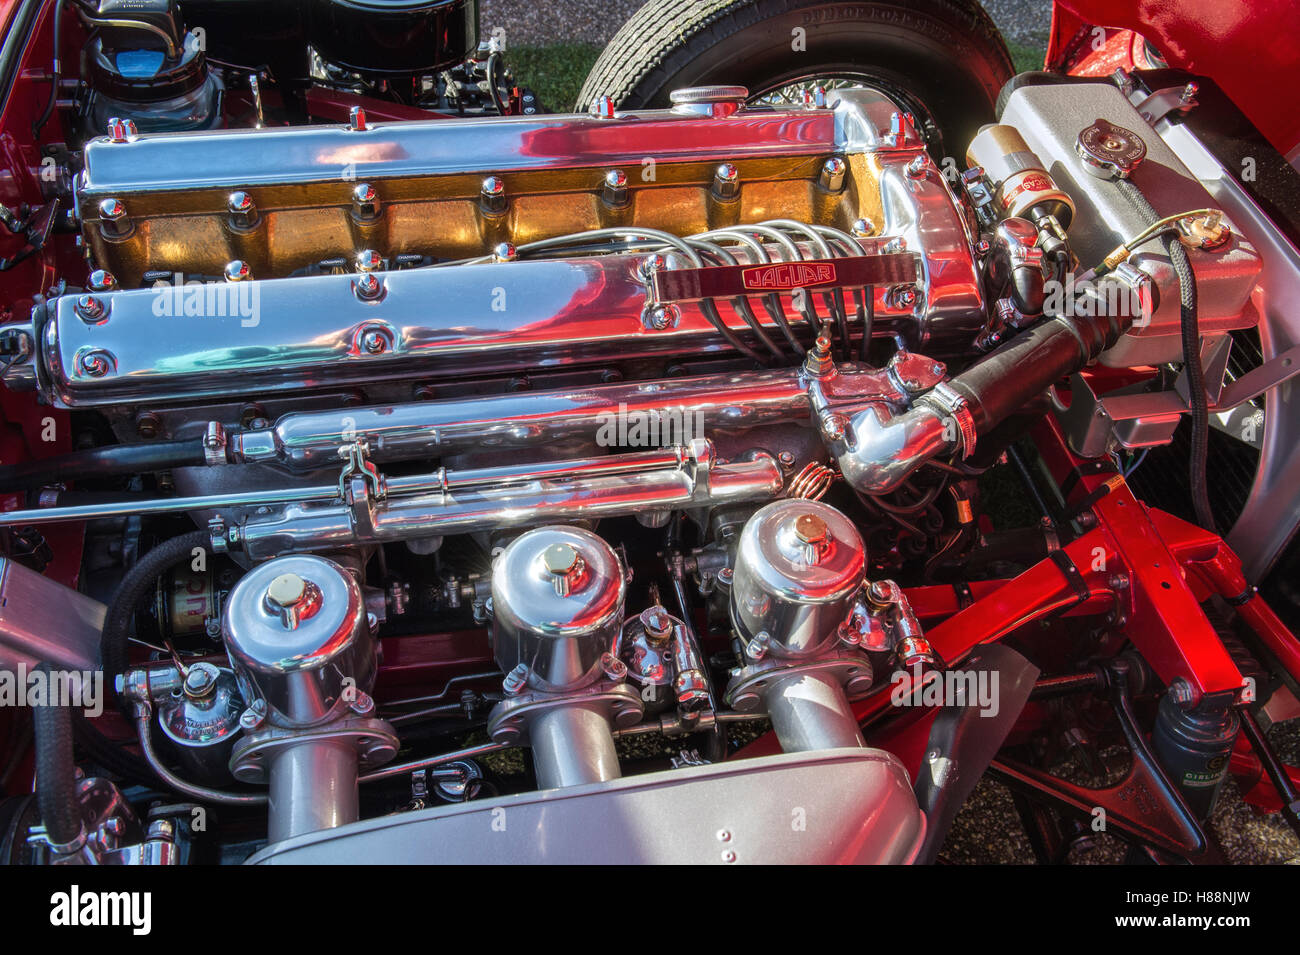 Jaguar  E Type Engine. Classic british sports car Stock Photo